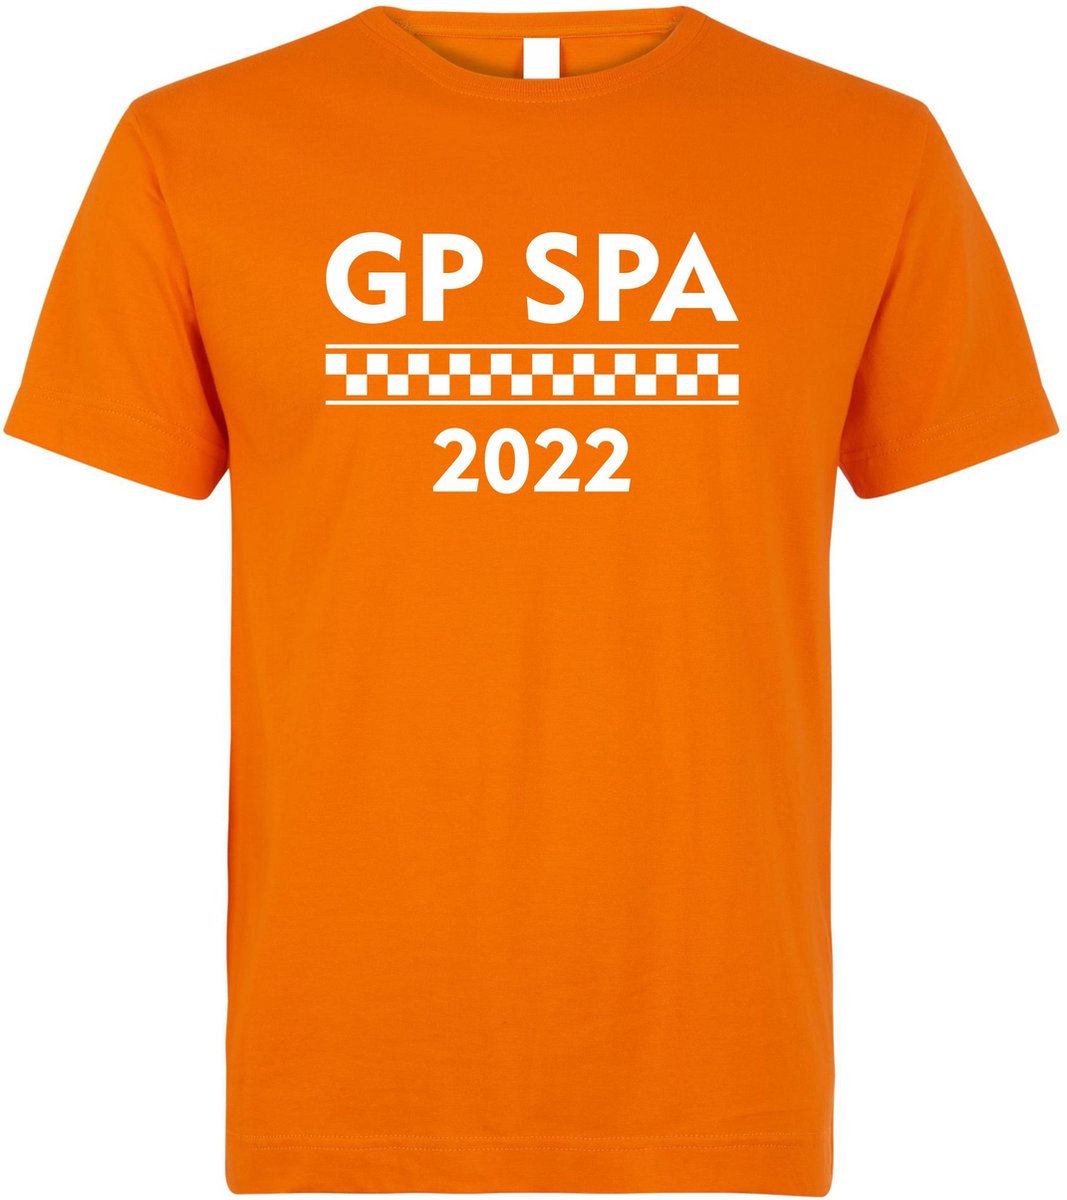 T-shirt kinderen GP Spa 2022 | Max Verstappen / Red Bull Racing / Formule 1 fan | Grand Prix Circuit Spa-Francorchamps | kleding shirt | Oranje | maat 80